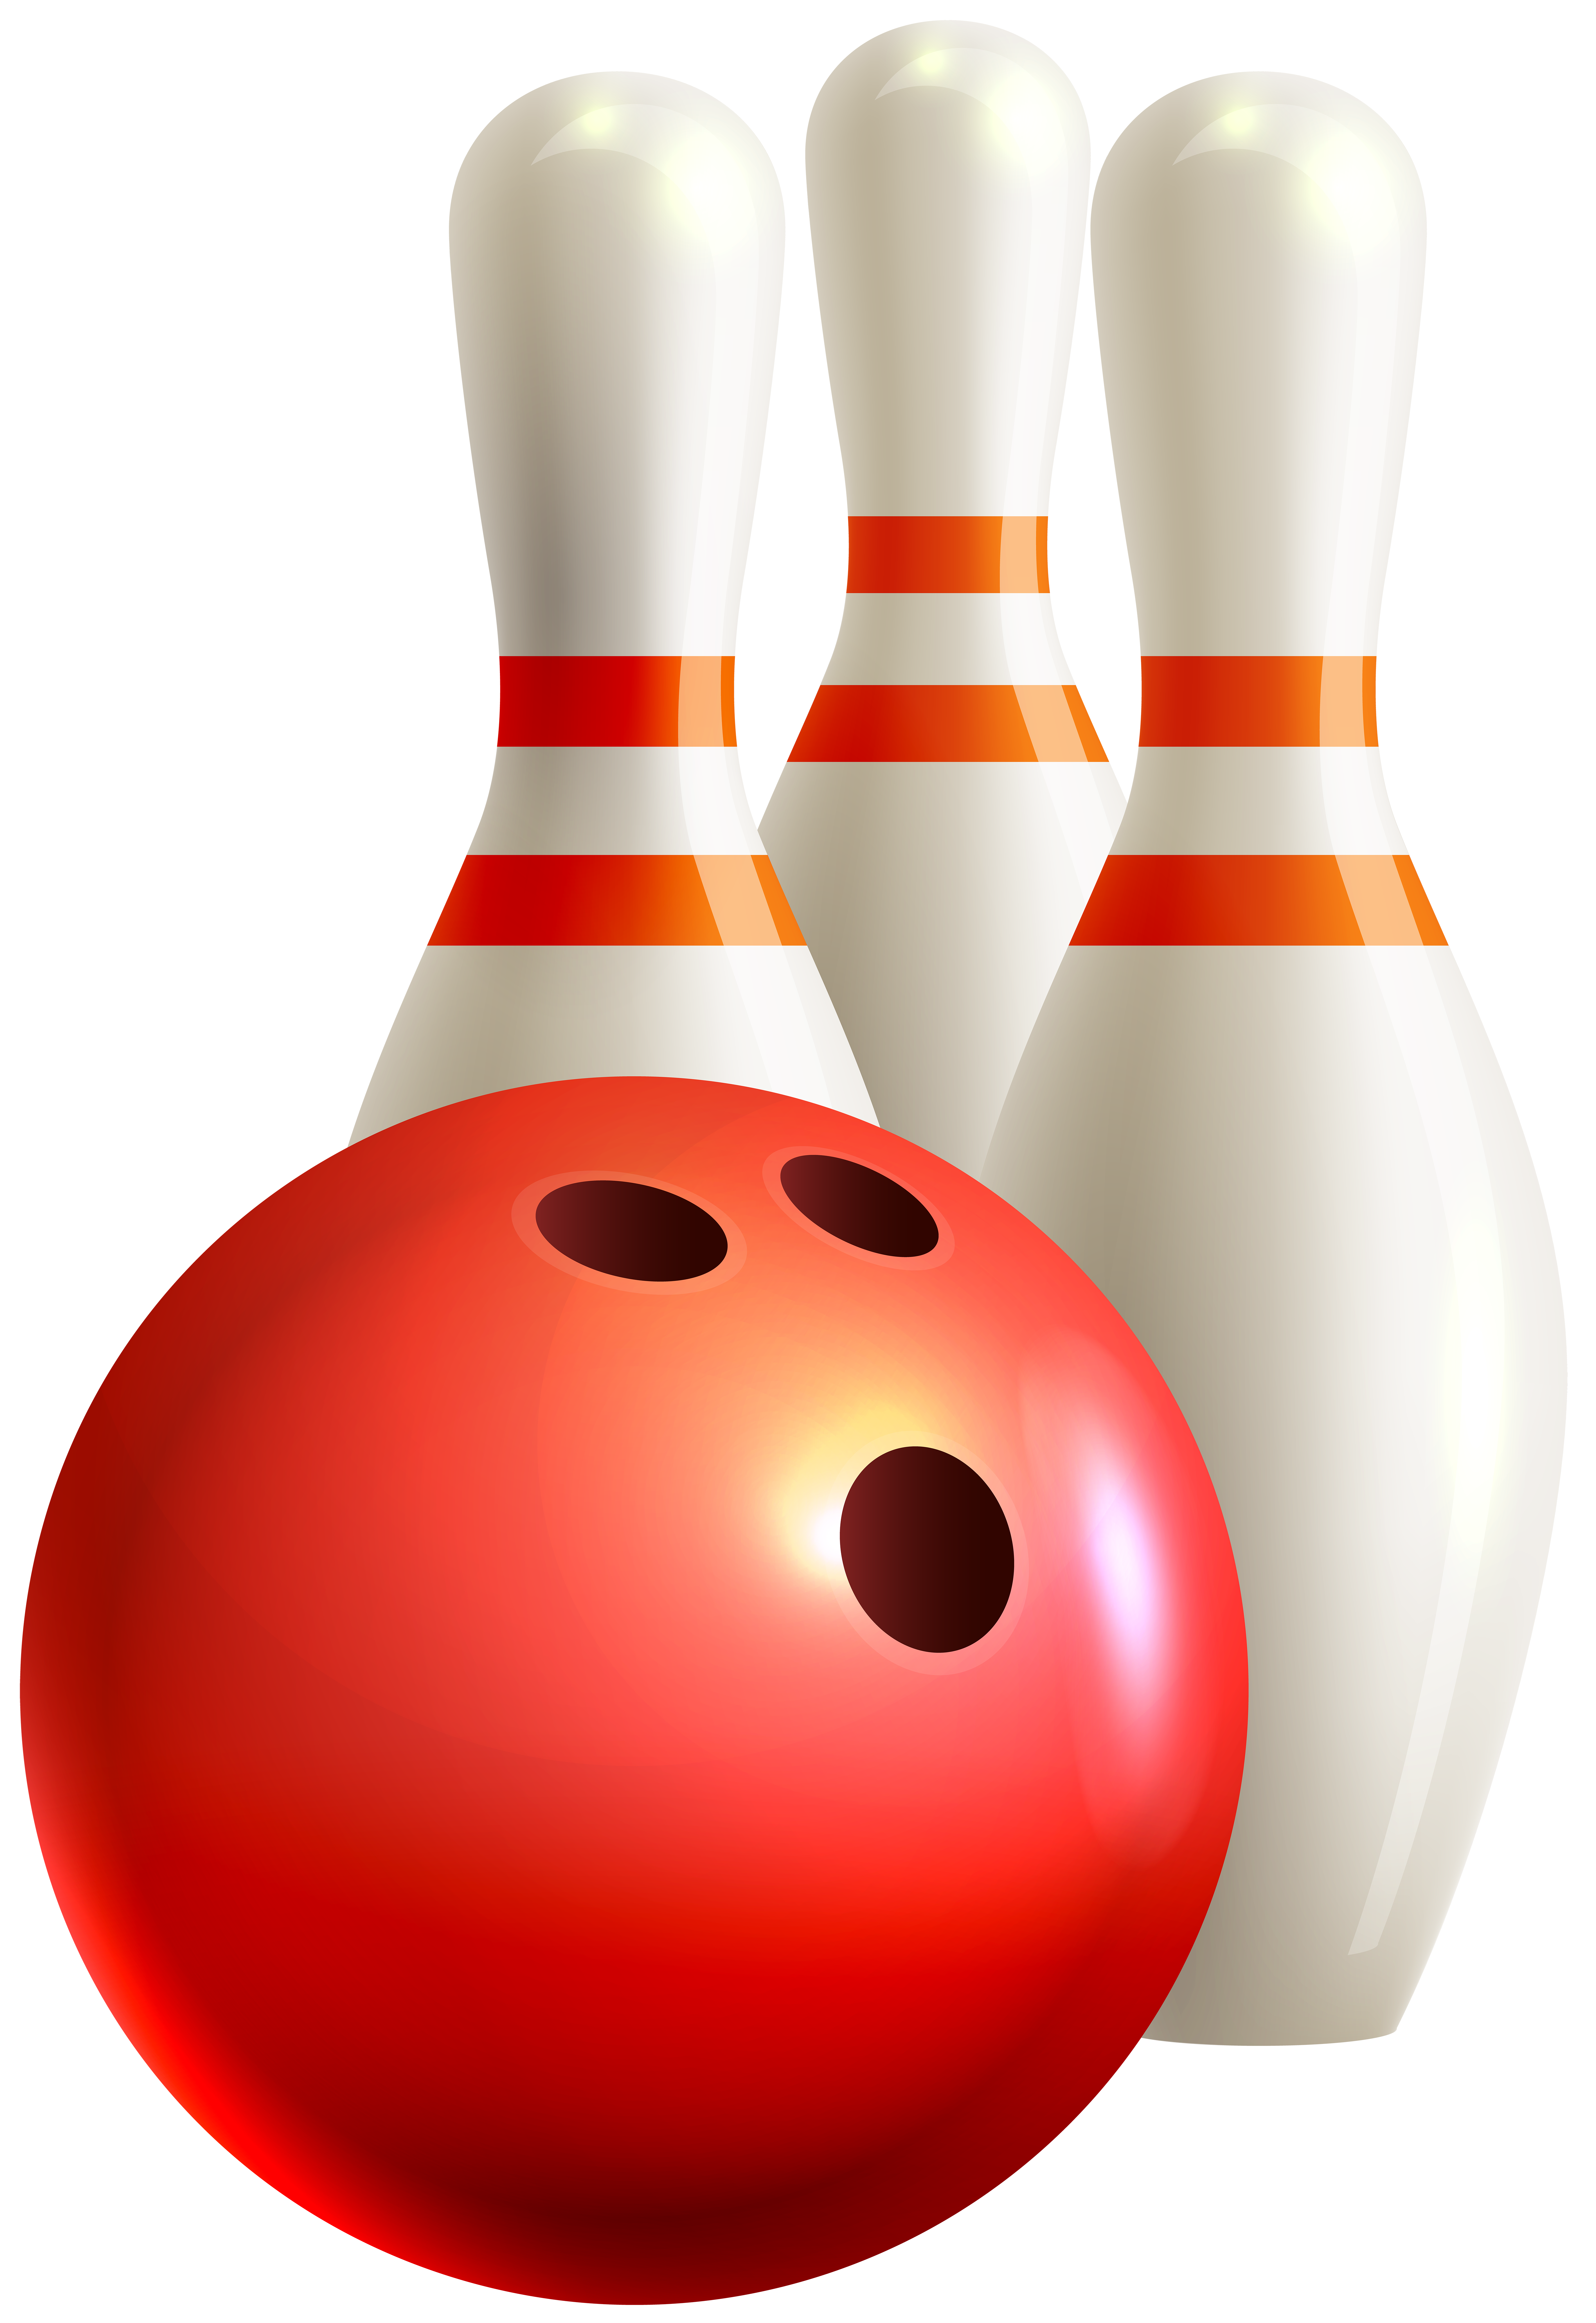 bowling pins and ball png